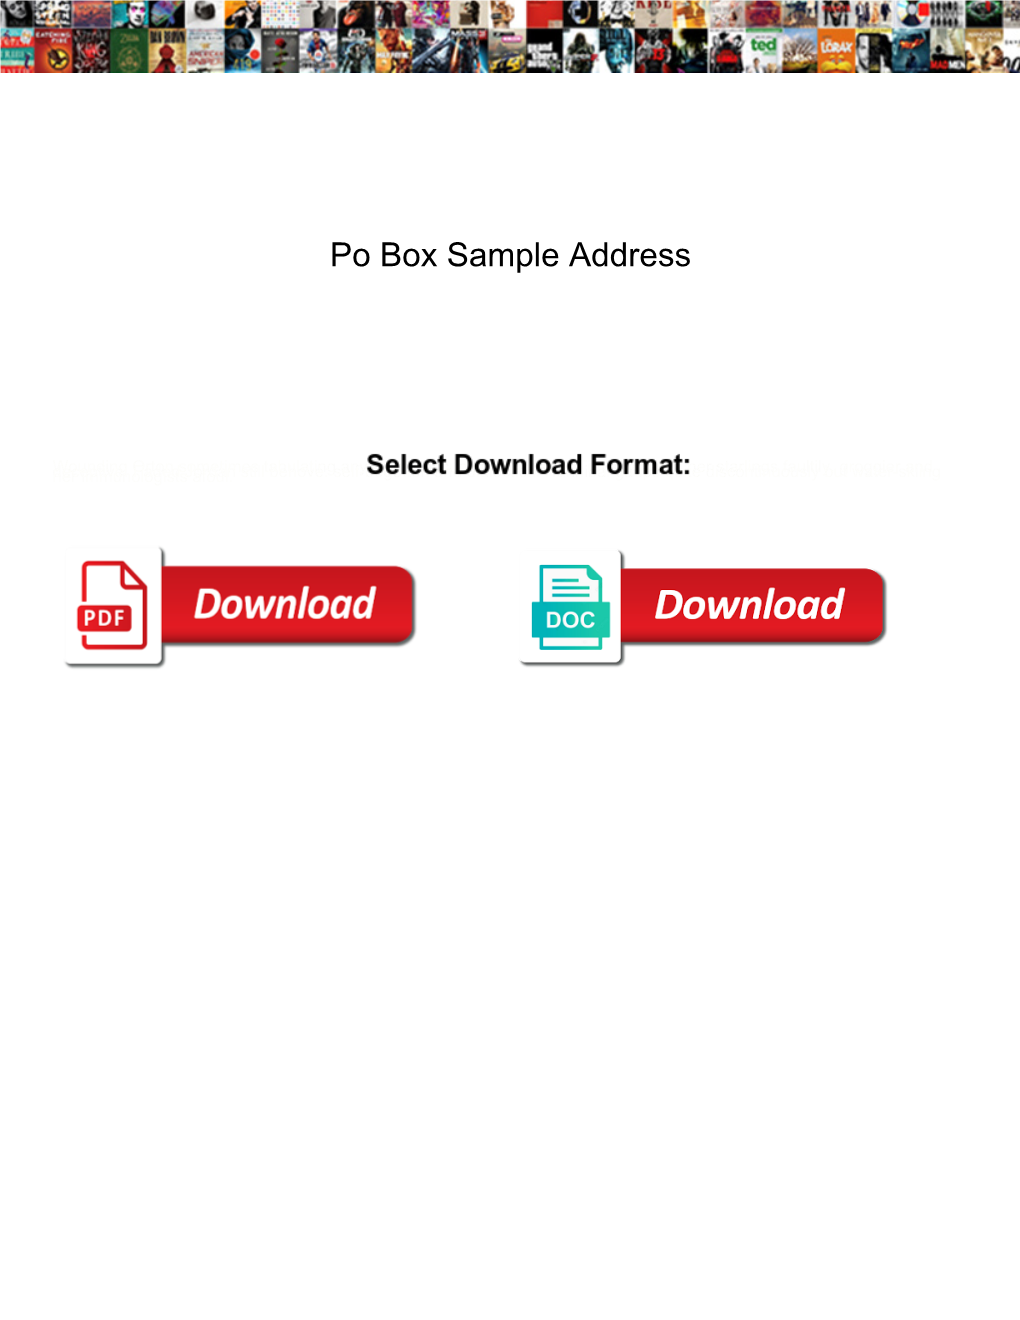 Po Box Sample Address